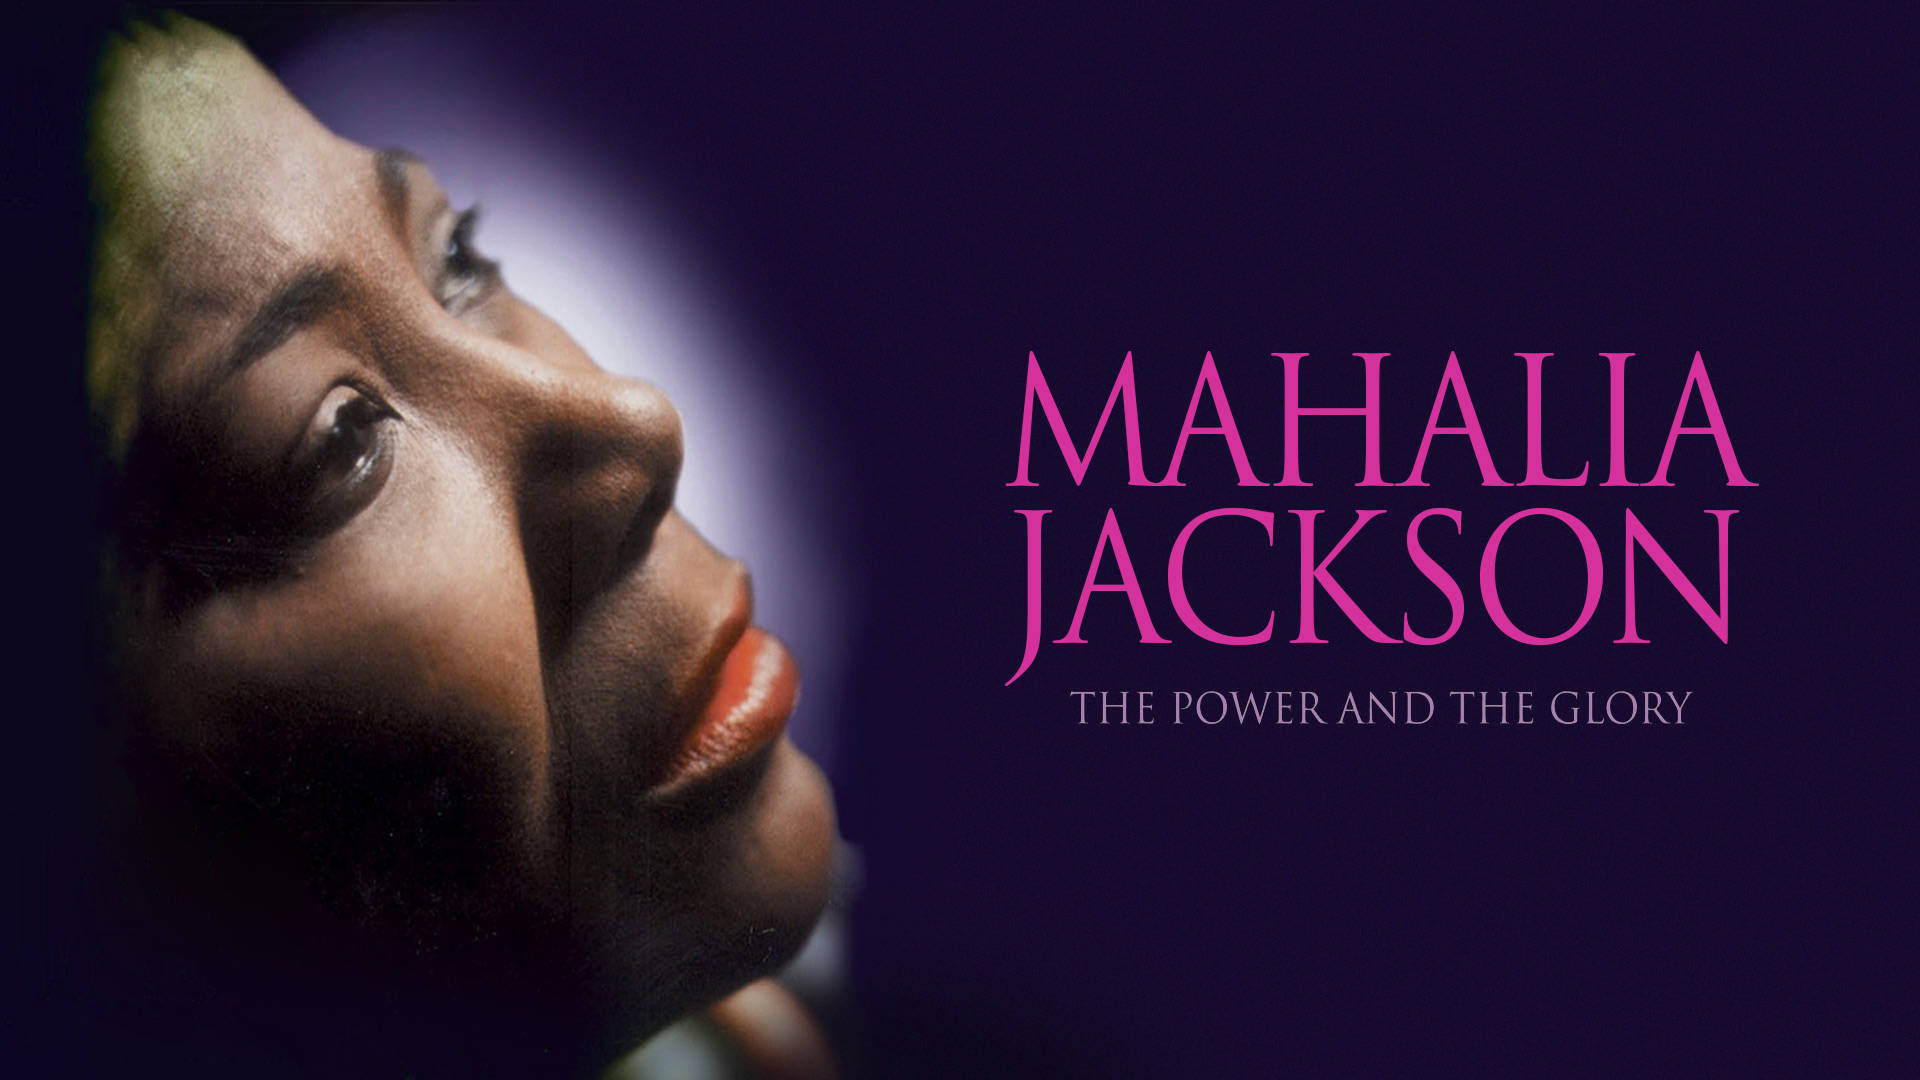 Mahaliajackson 1997 The Power And The Glory Dokumentär. Wallpaper